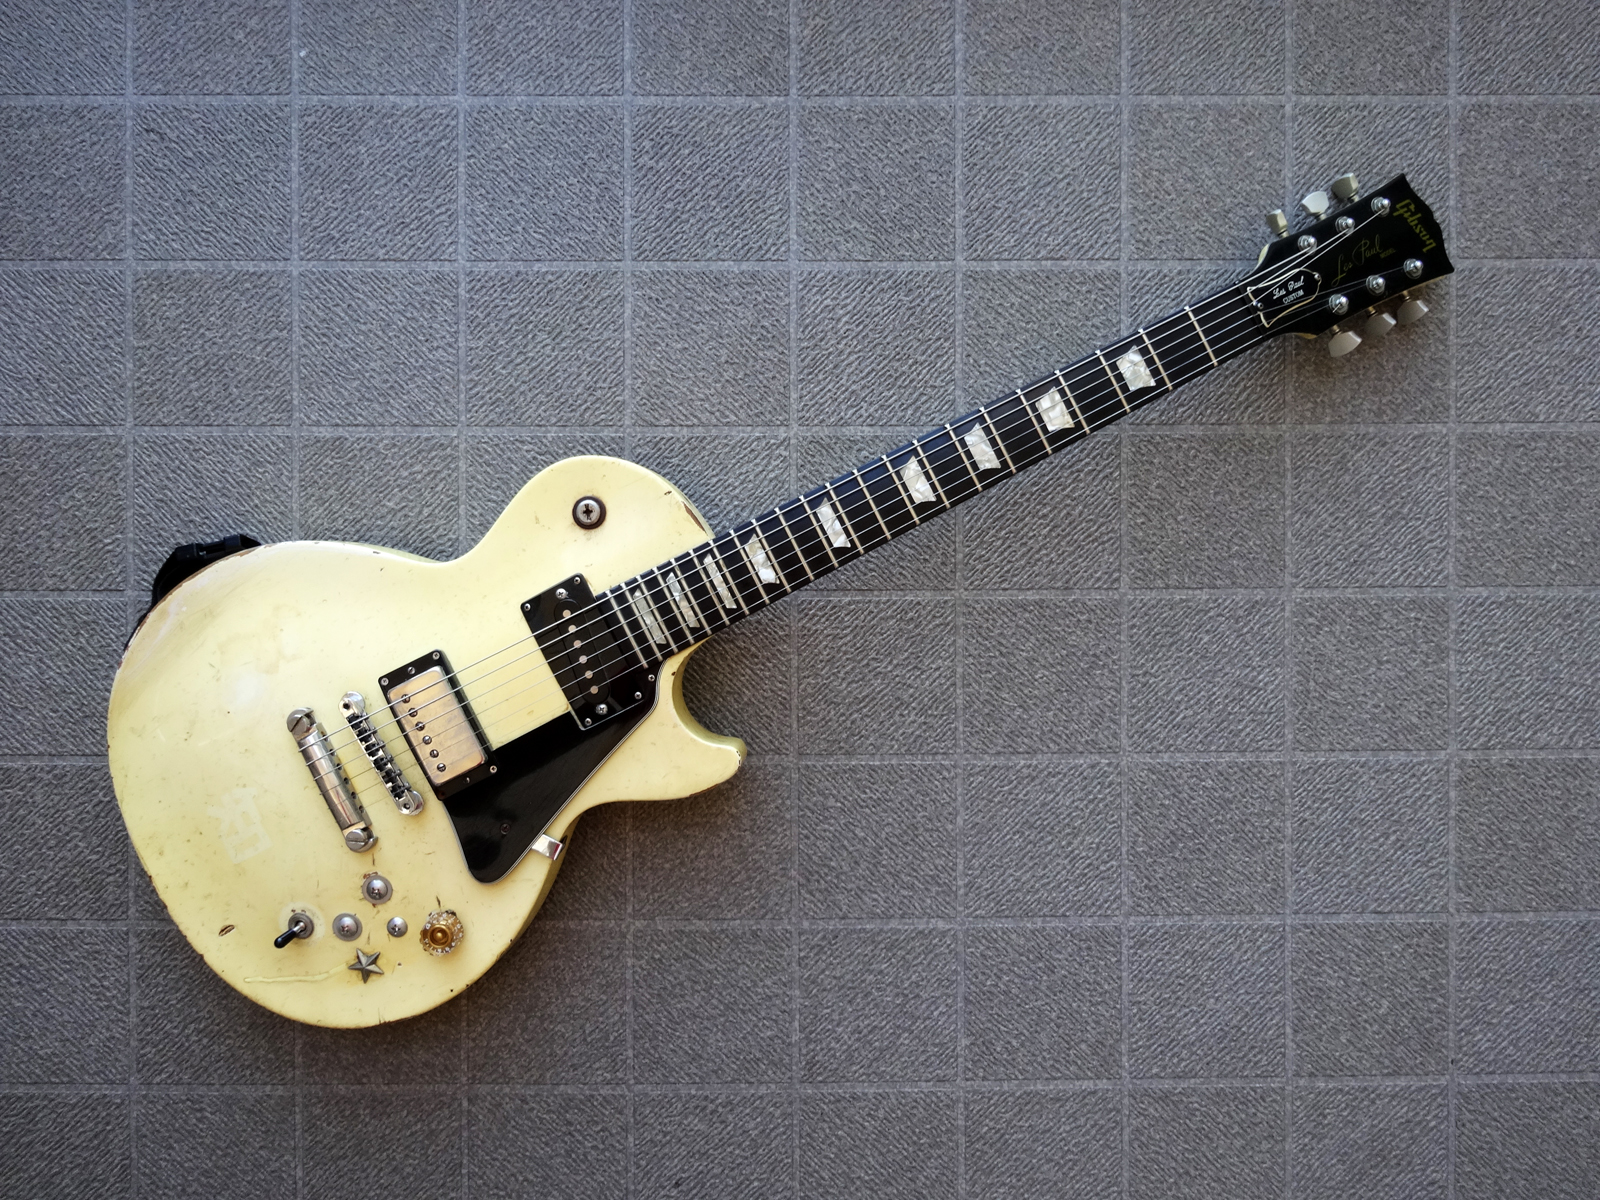 Gibson Les Paul studio エボニー